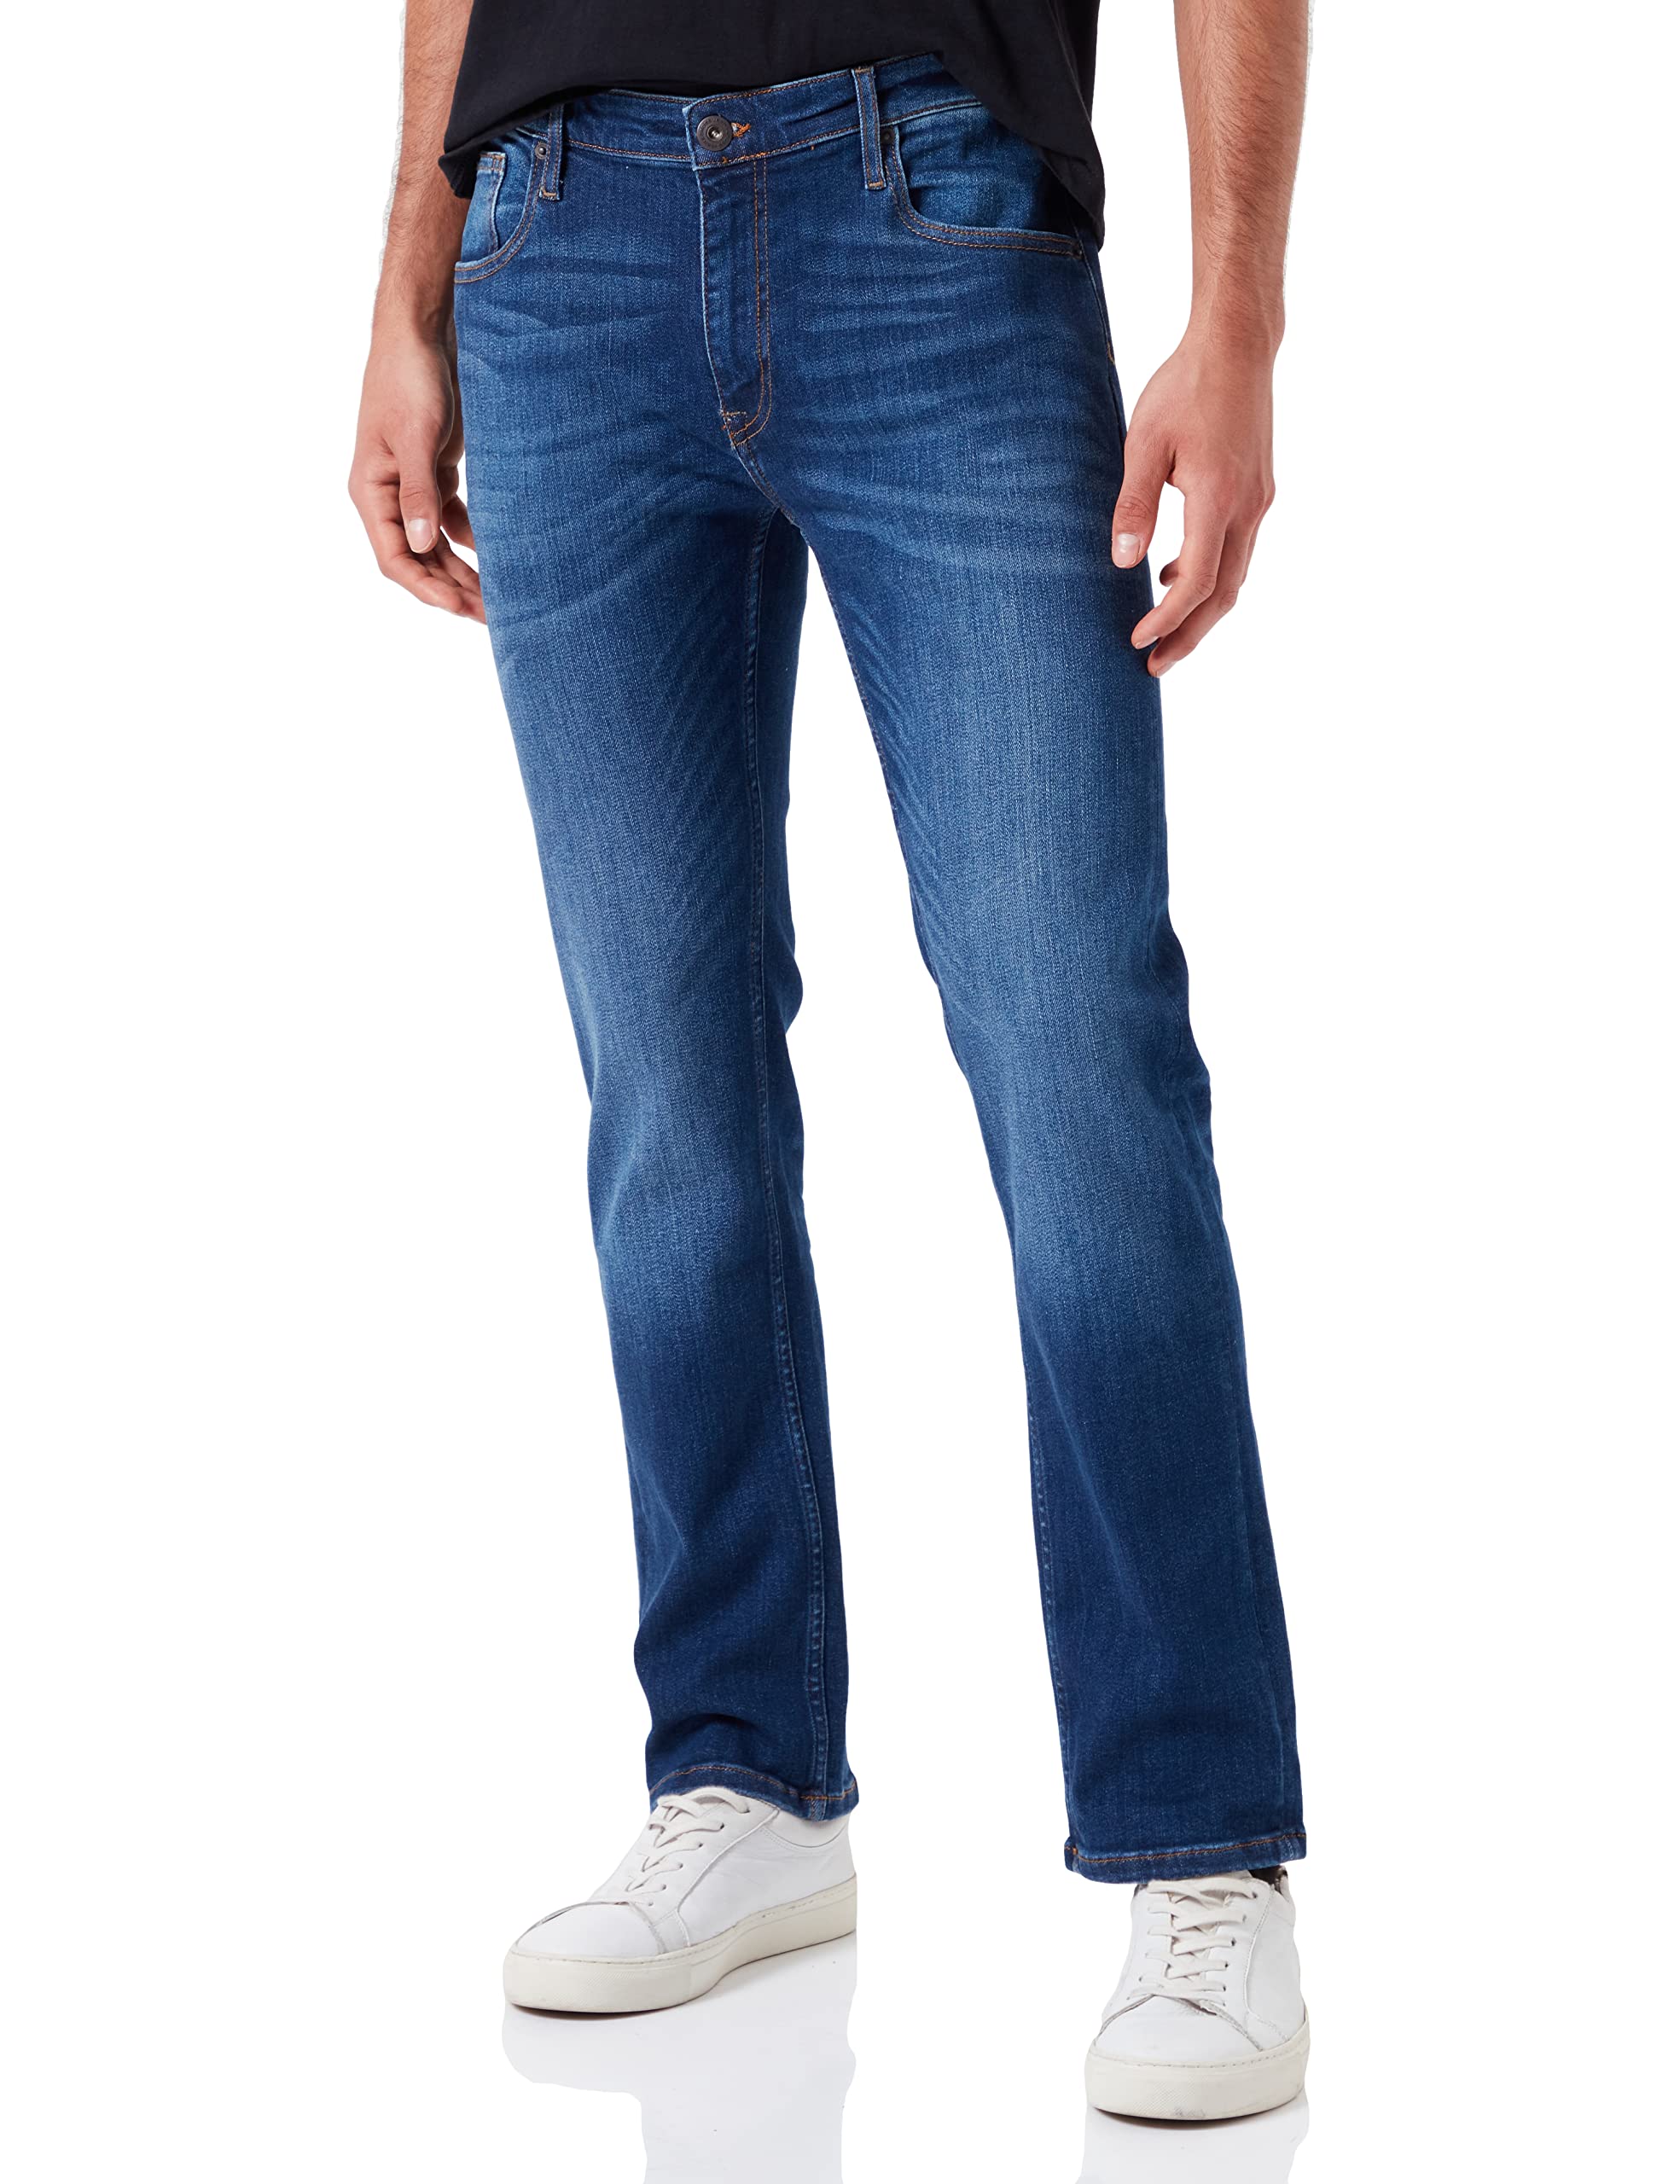 Cross Herren Damien Slim Jeans, Blau (Mid Blue Used 017), 42W / 34L